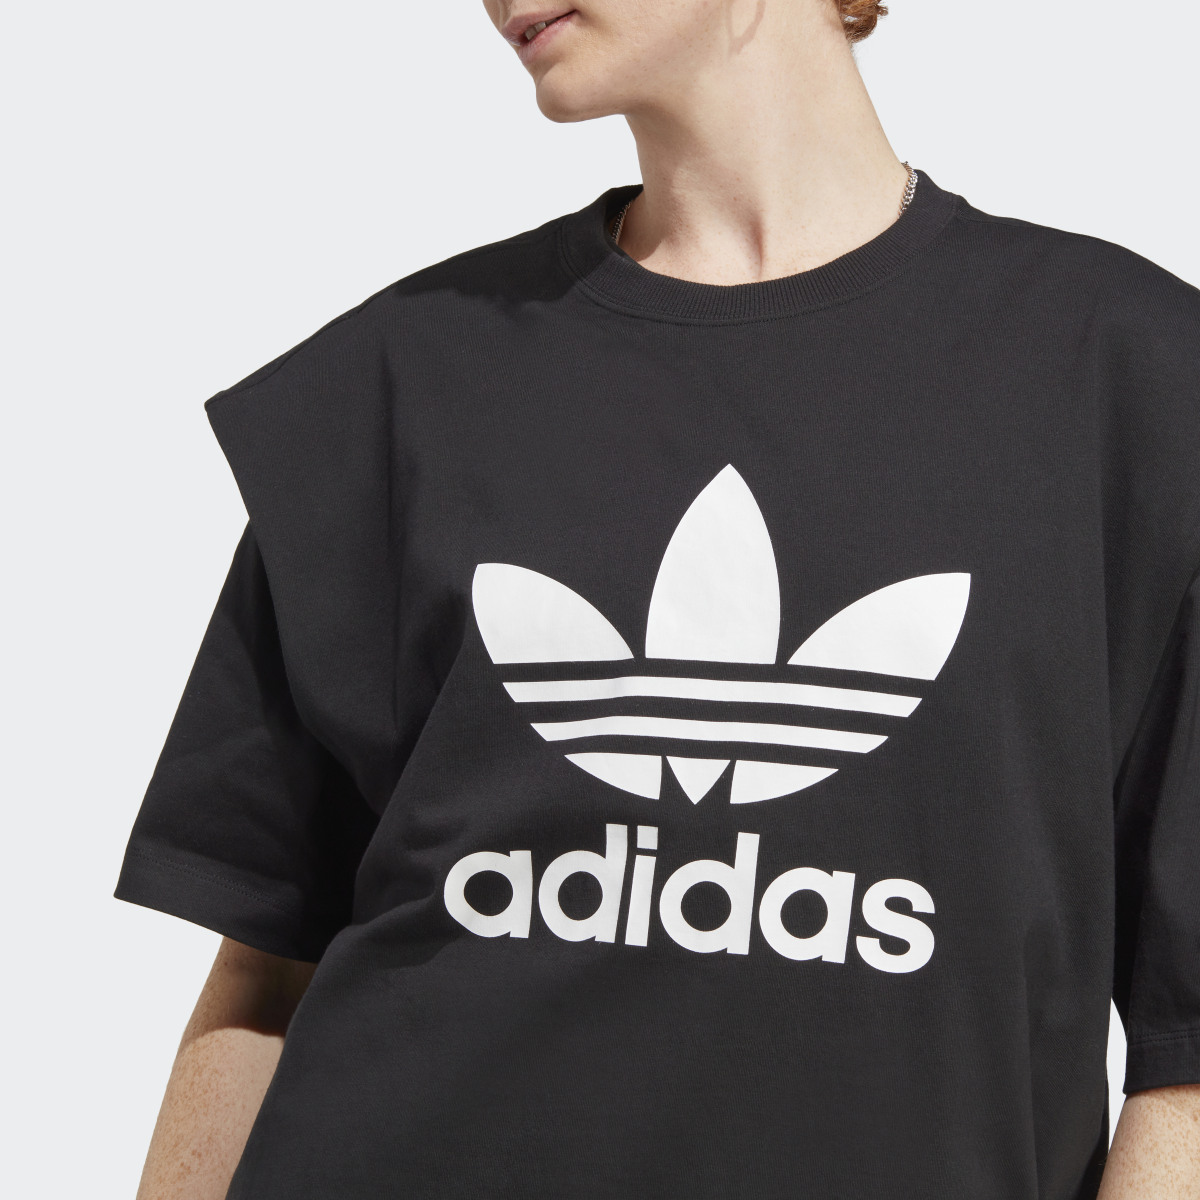 Adidas T-shirt Always Original. 7